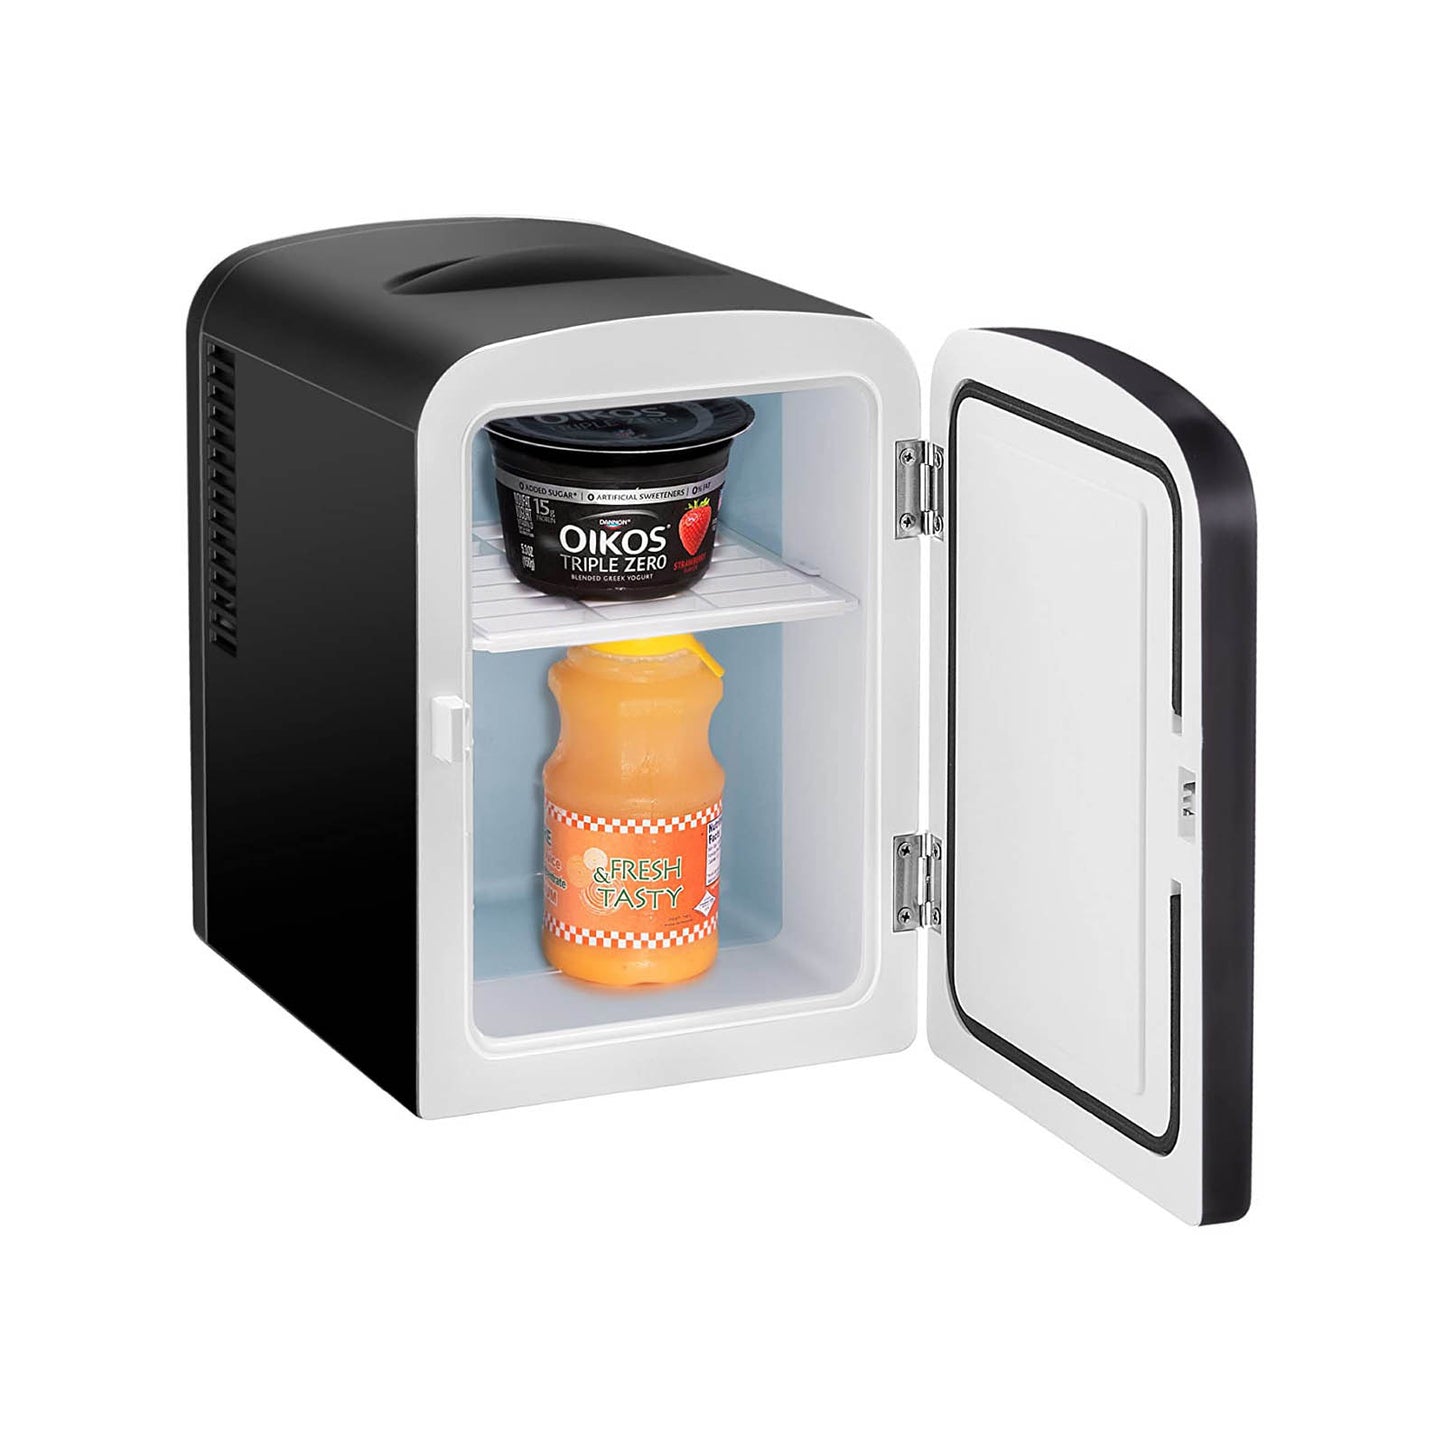 Mini Refrigerador Portátil Chefman RJ48-BLACK-4